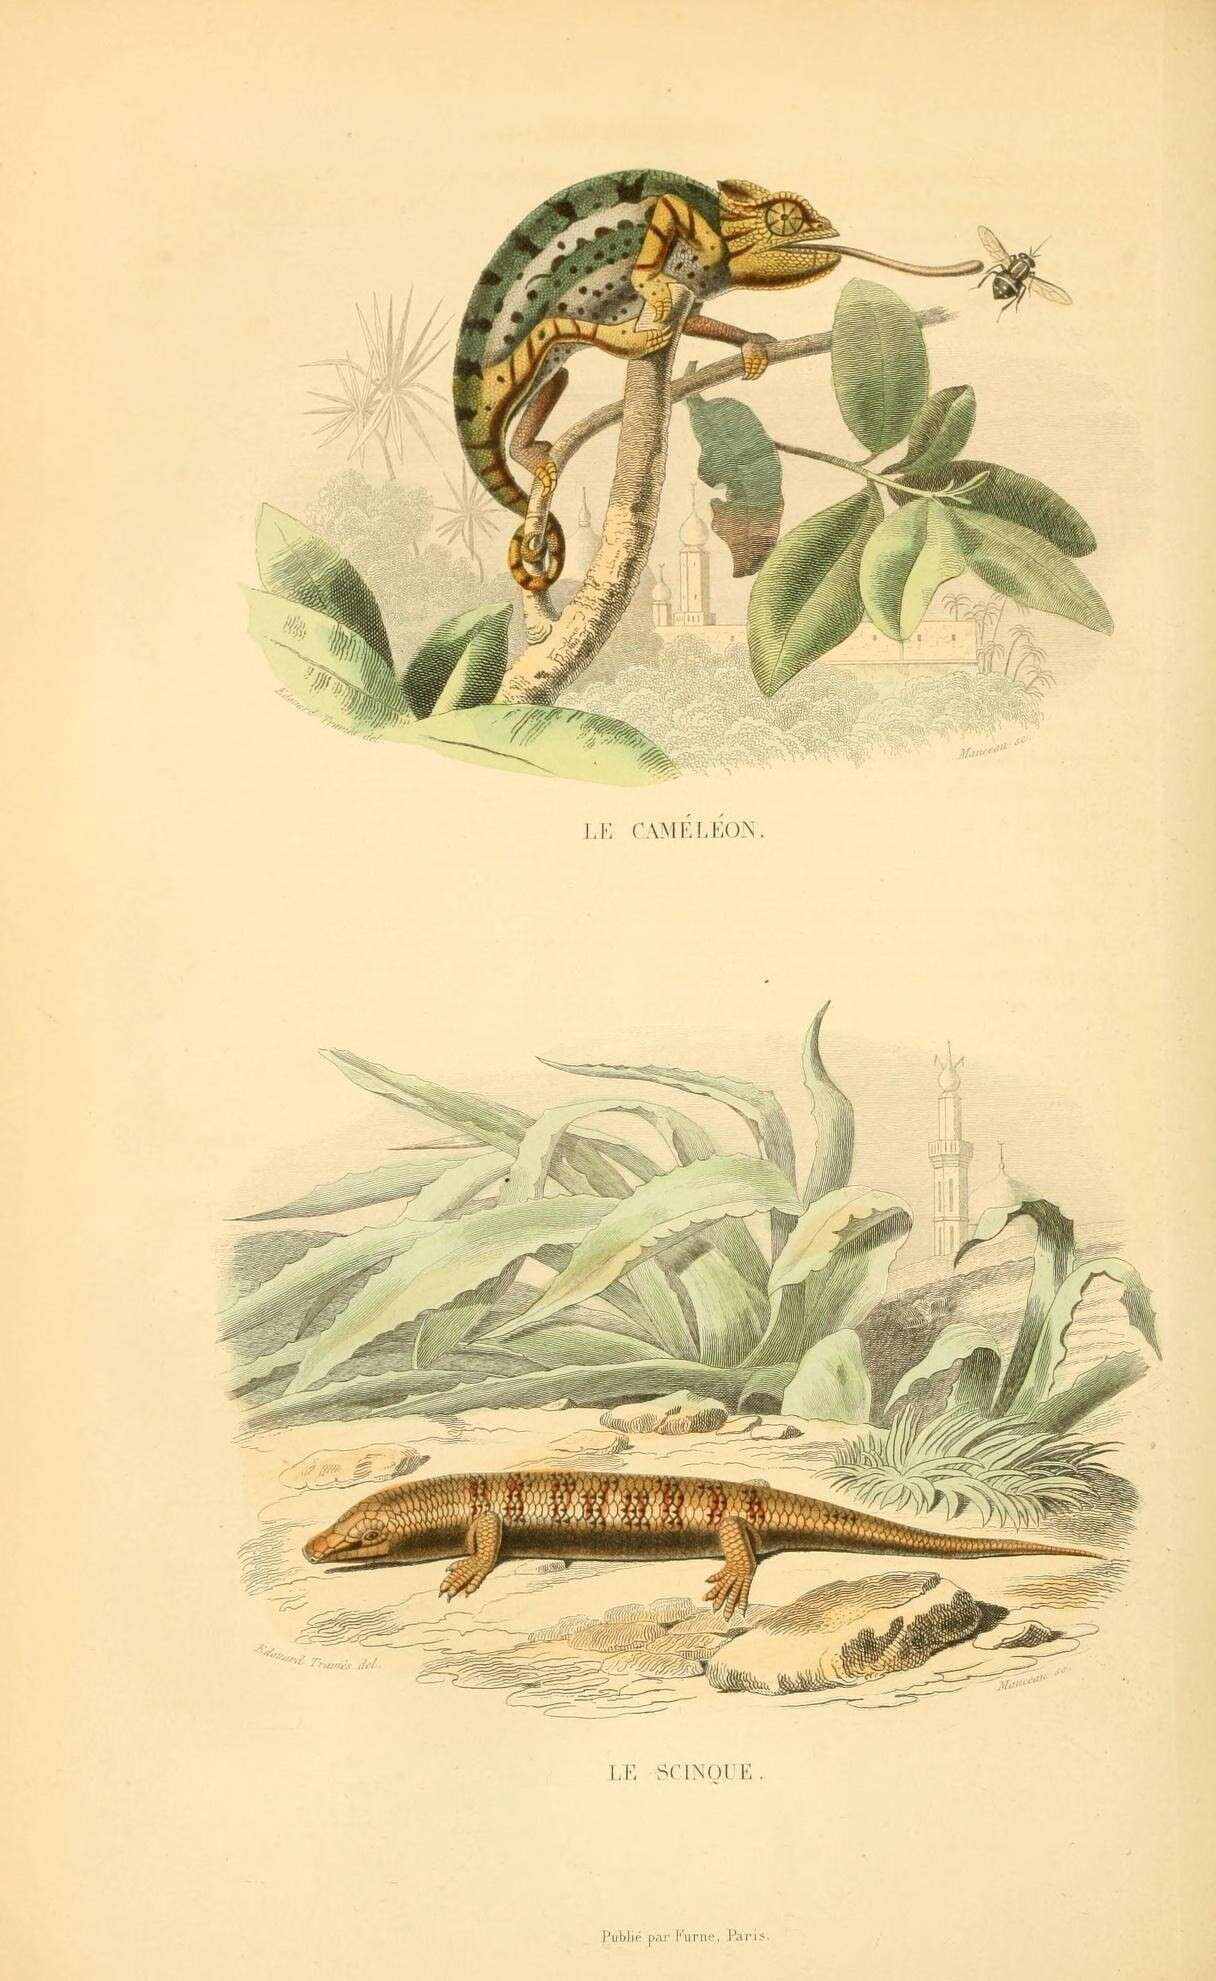 Image of African Chameleon